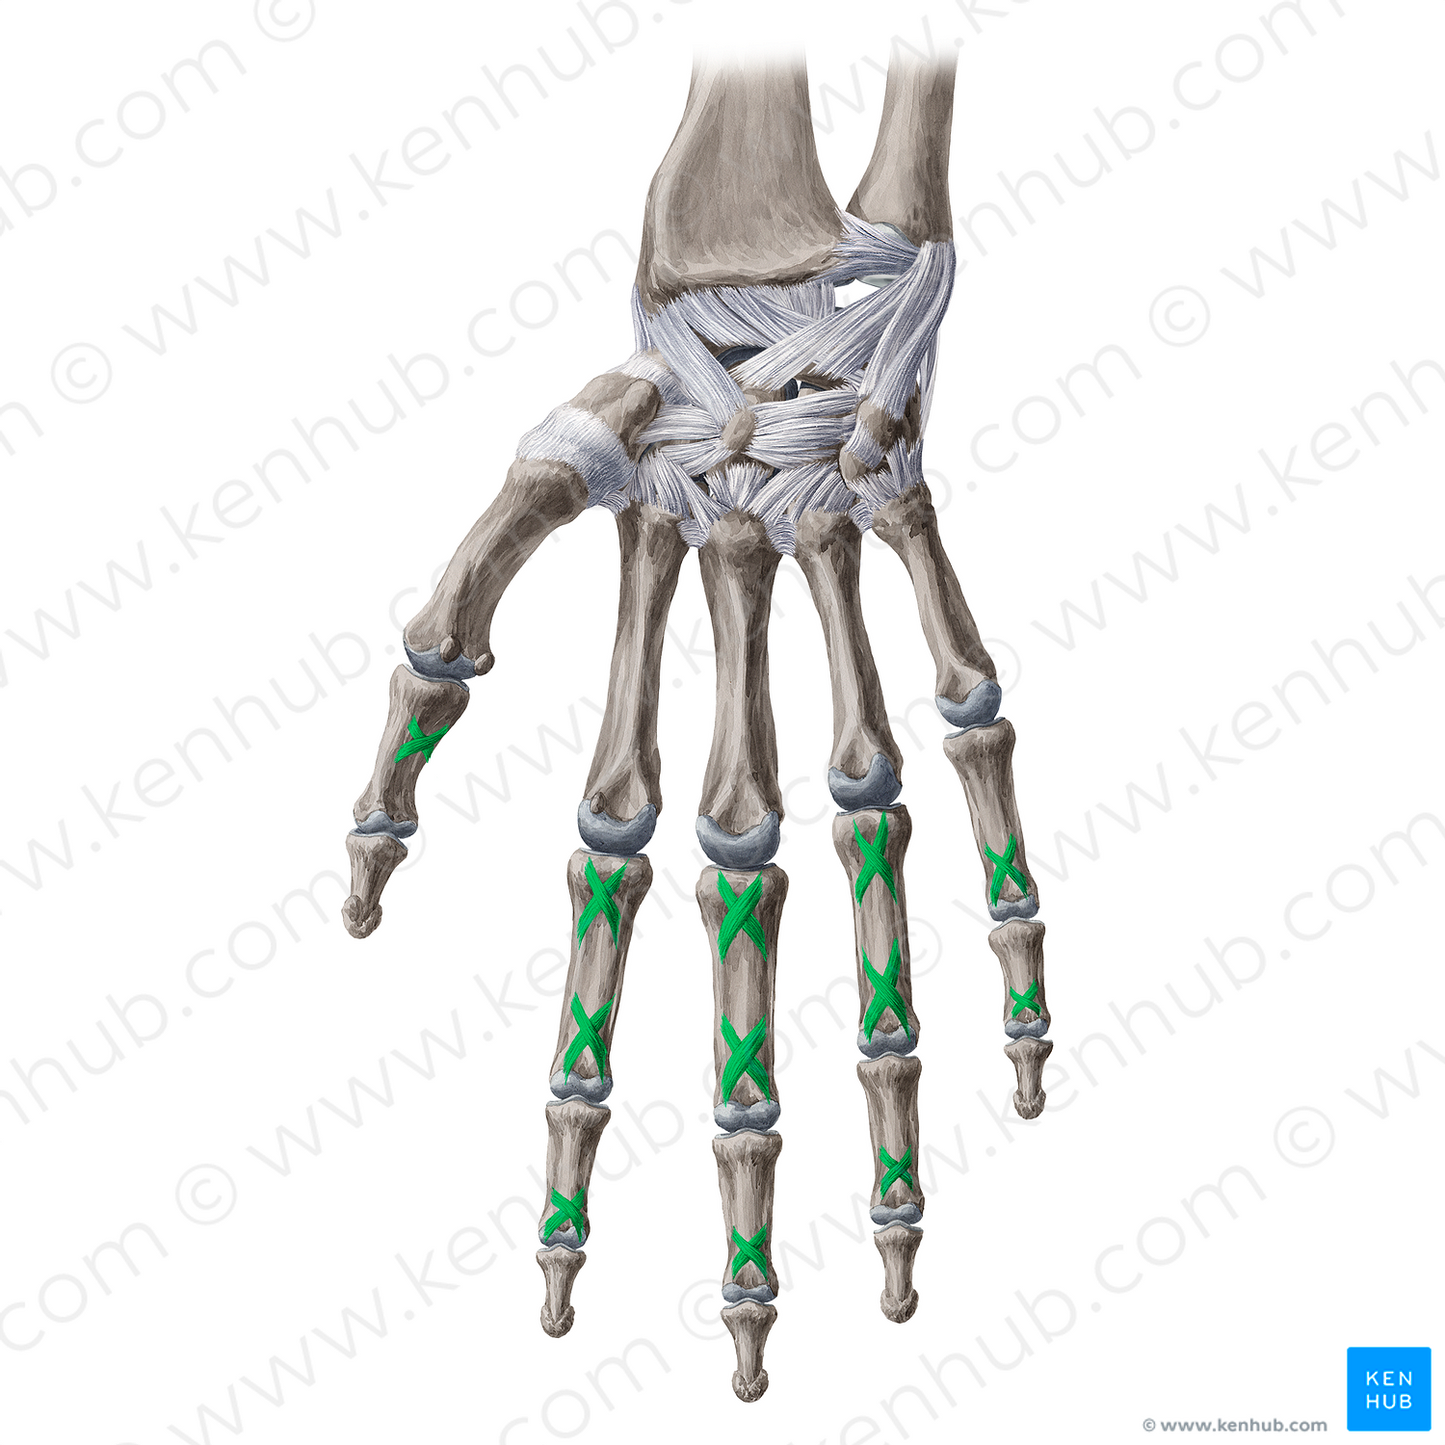 Cruciform ligaments of fingers (#20651)